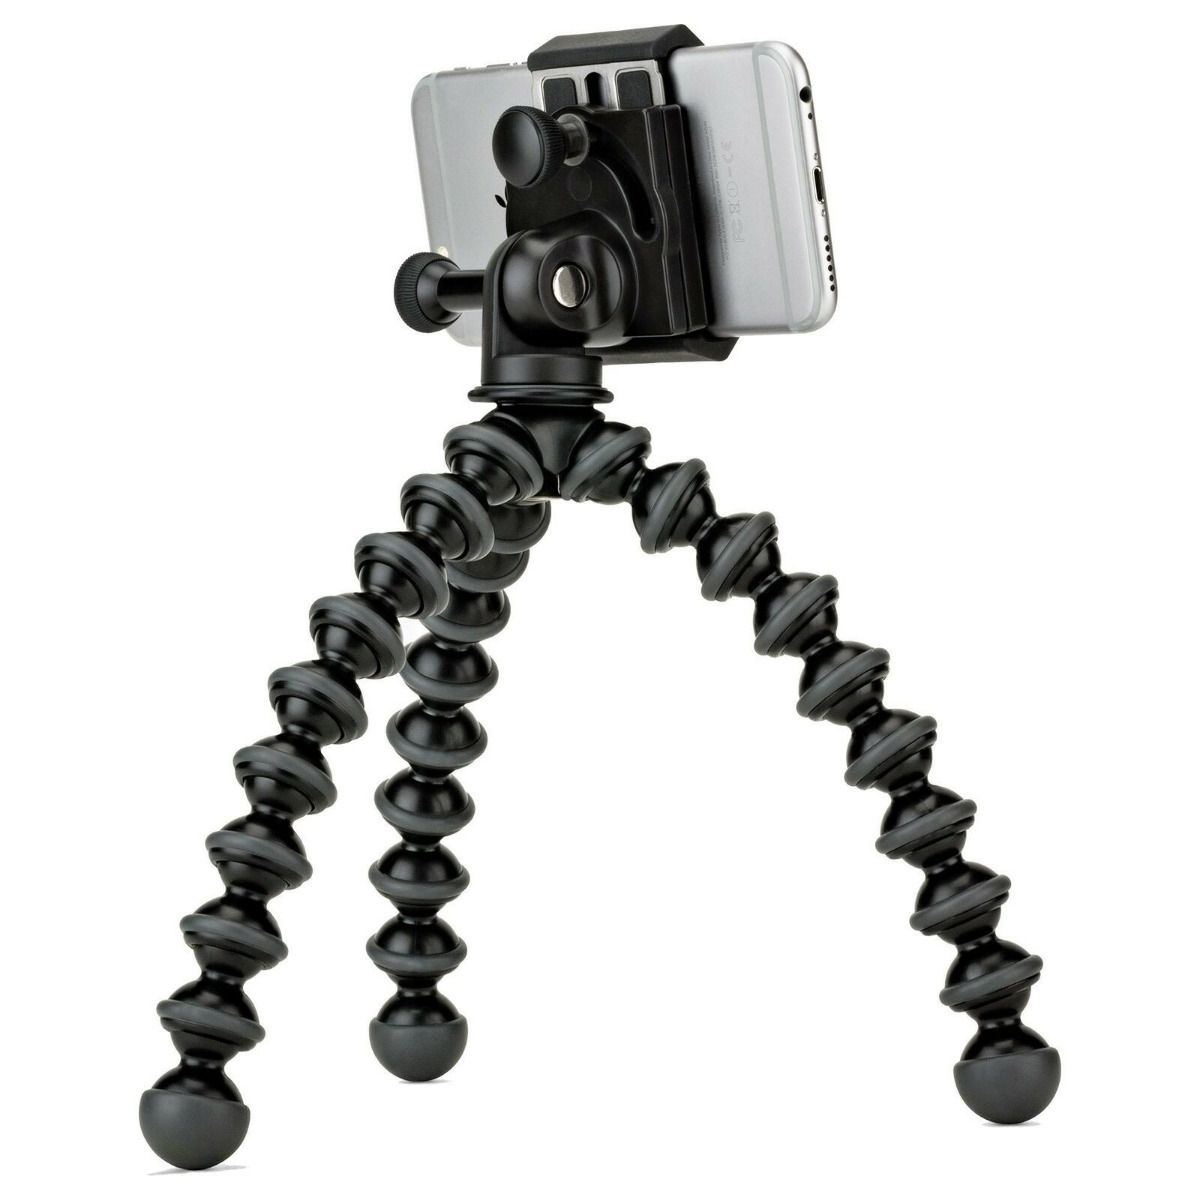 Clearance Joby GripTight GorillaPod Stand PRO Mini Tripod for Smartphone